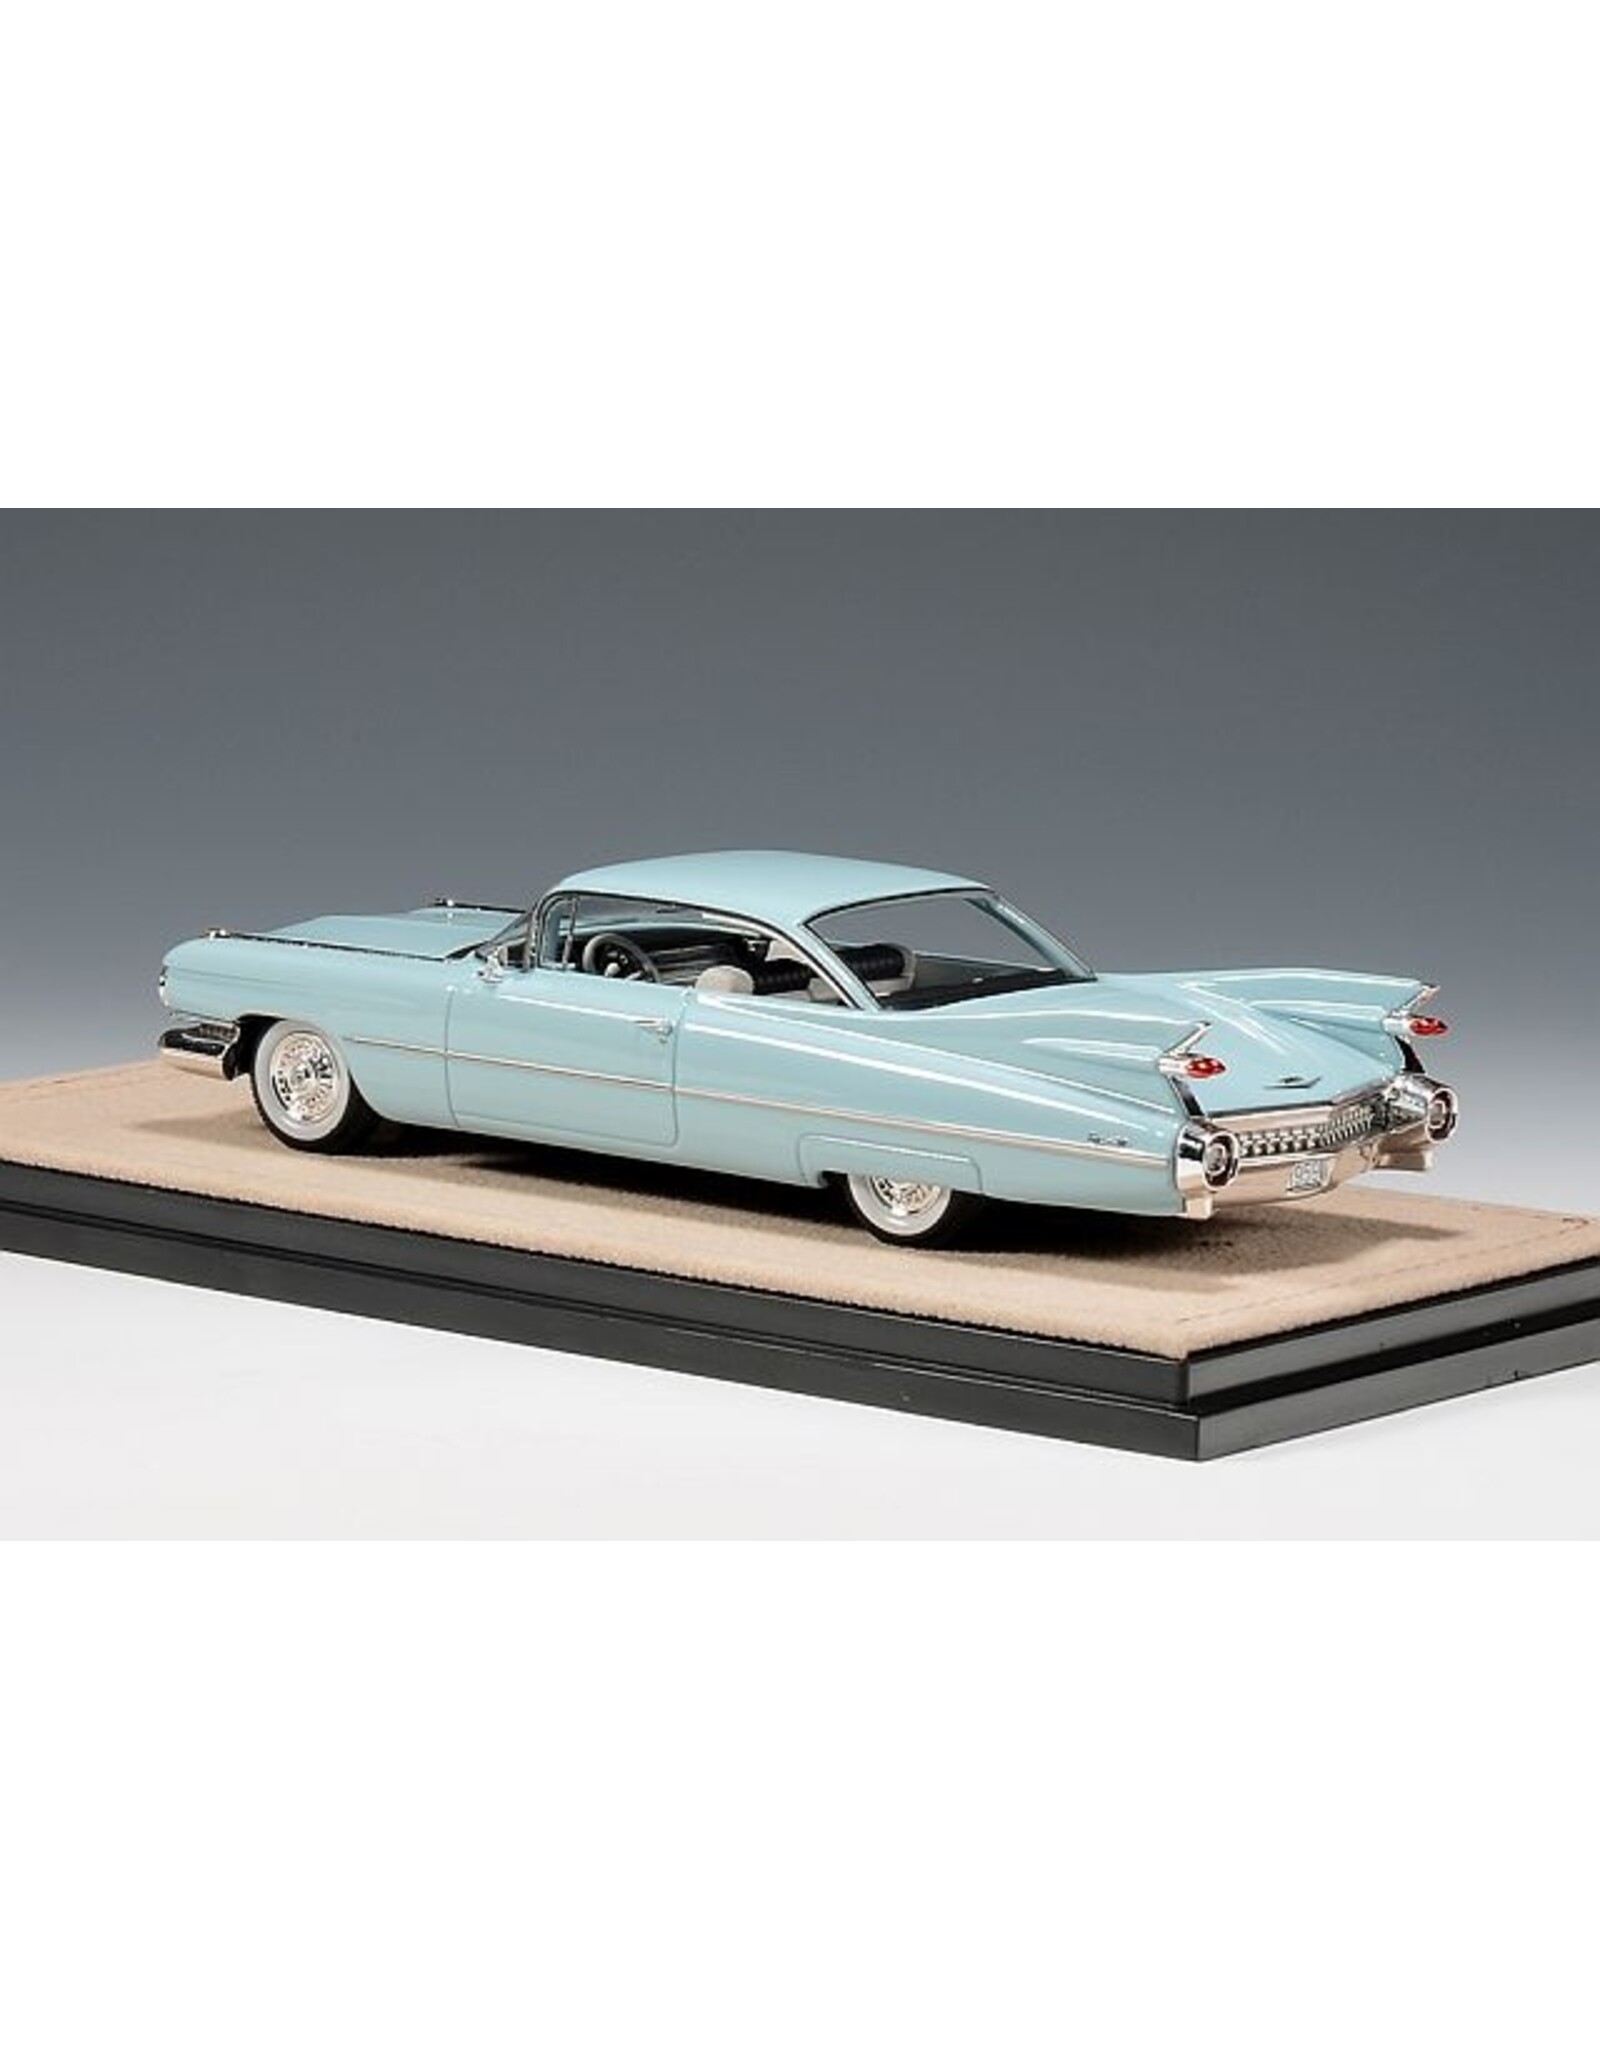 Cadillac(General Motors) Cadillac Coupe DeVille(1959)Breton bleu